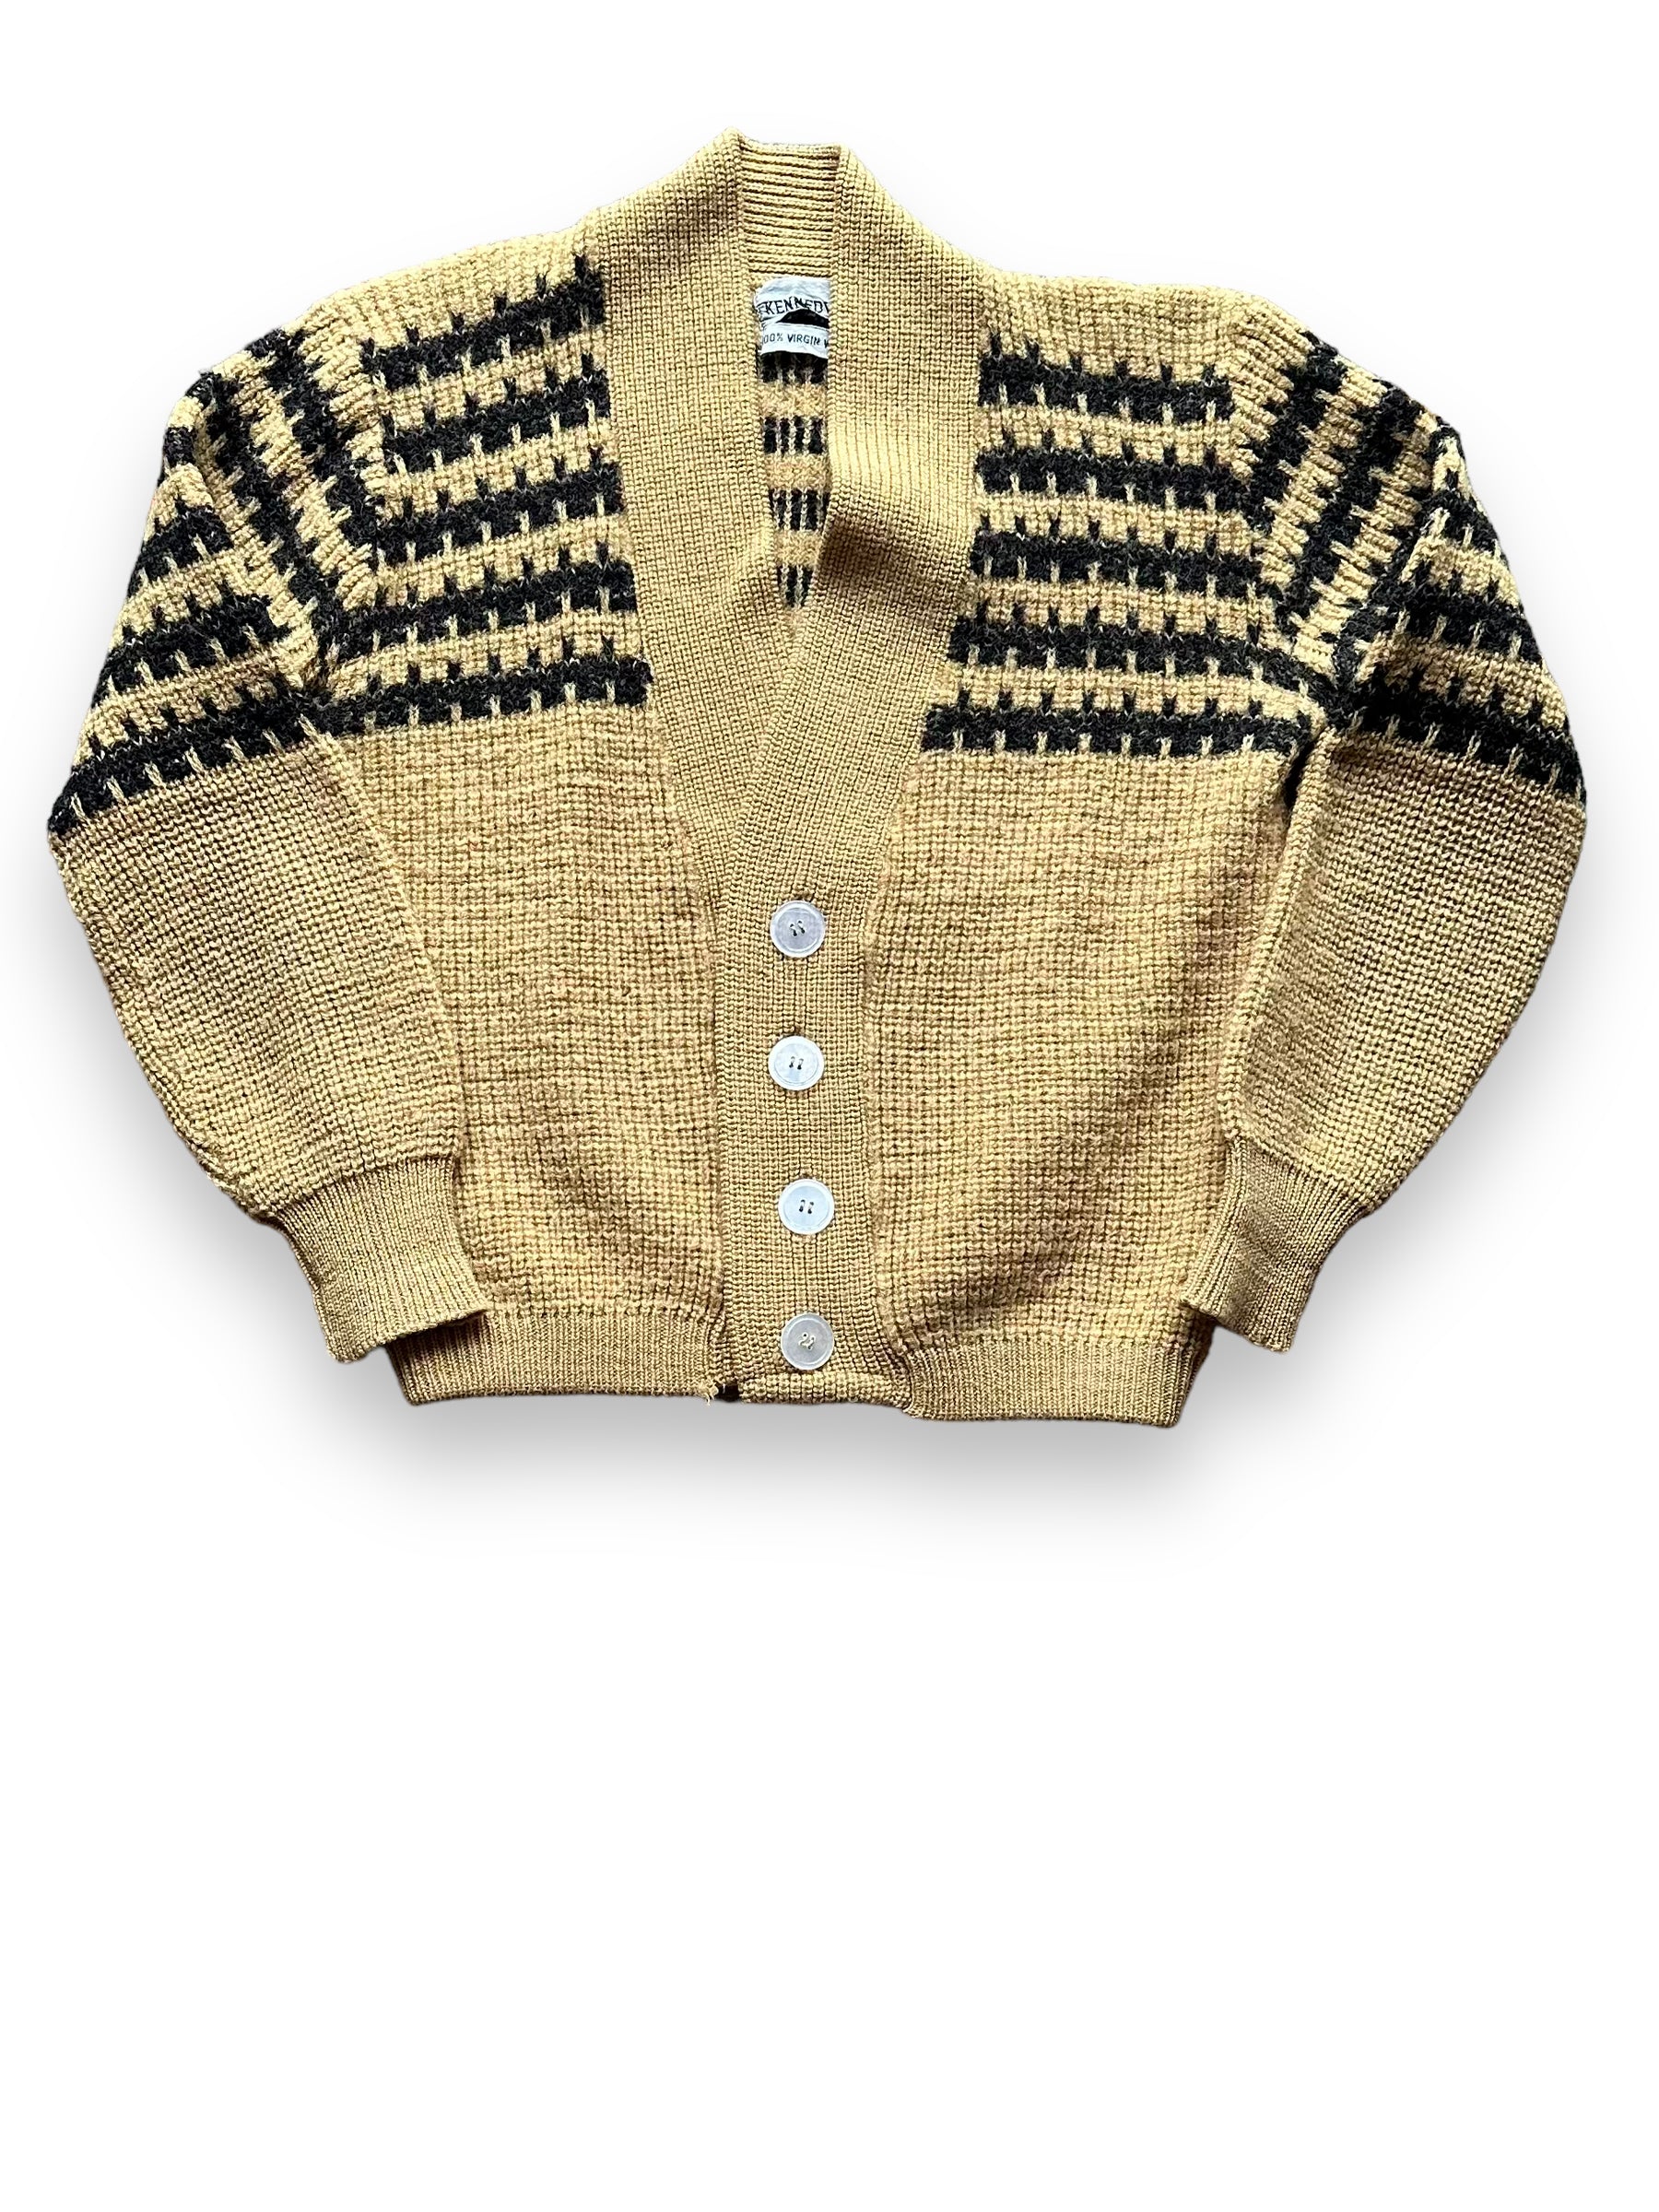 Front View of Vintage Kennedys Wool Sweater SZ L | Vintage Cardigan Sweaters Seattle | Barn Owl Vintage Seattle